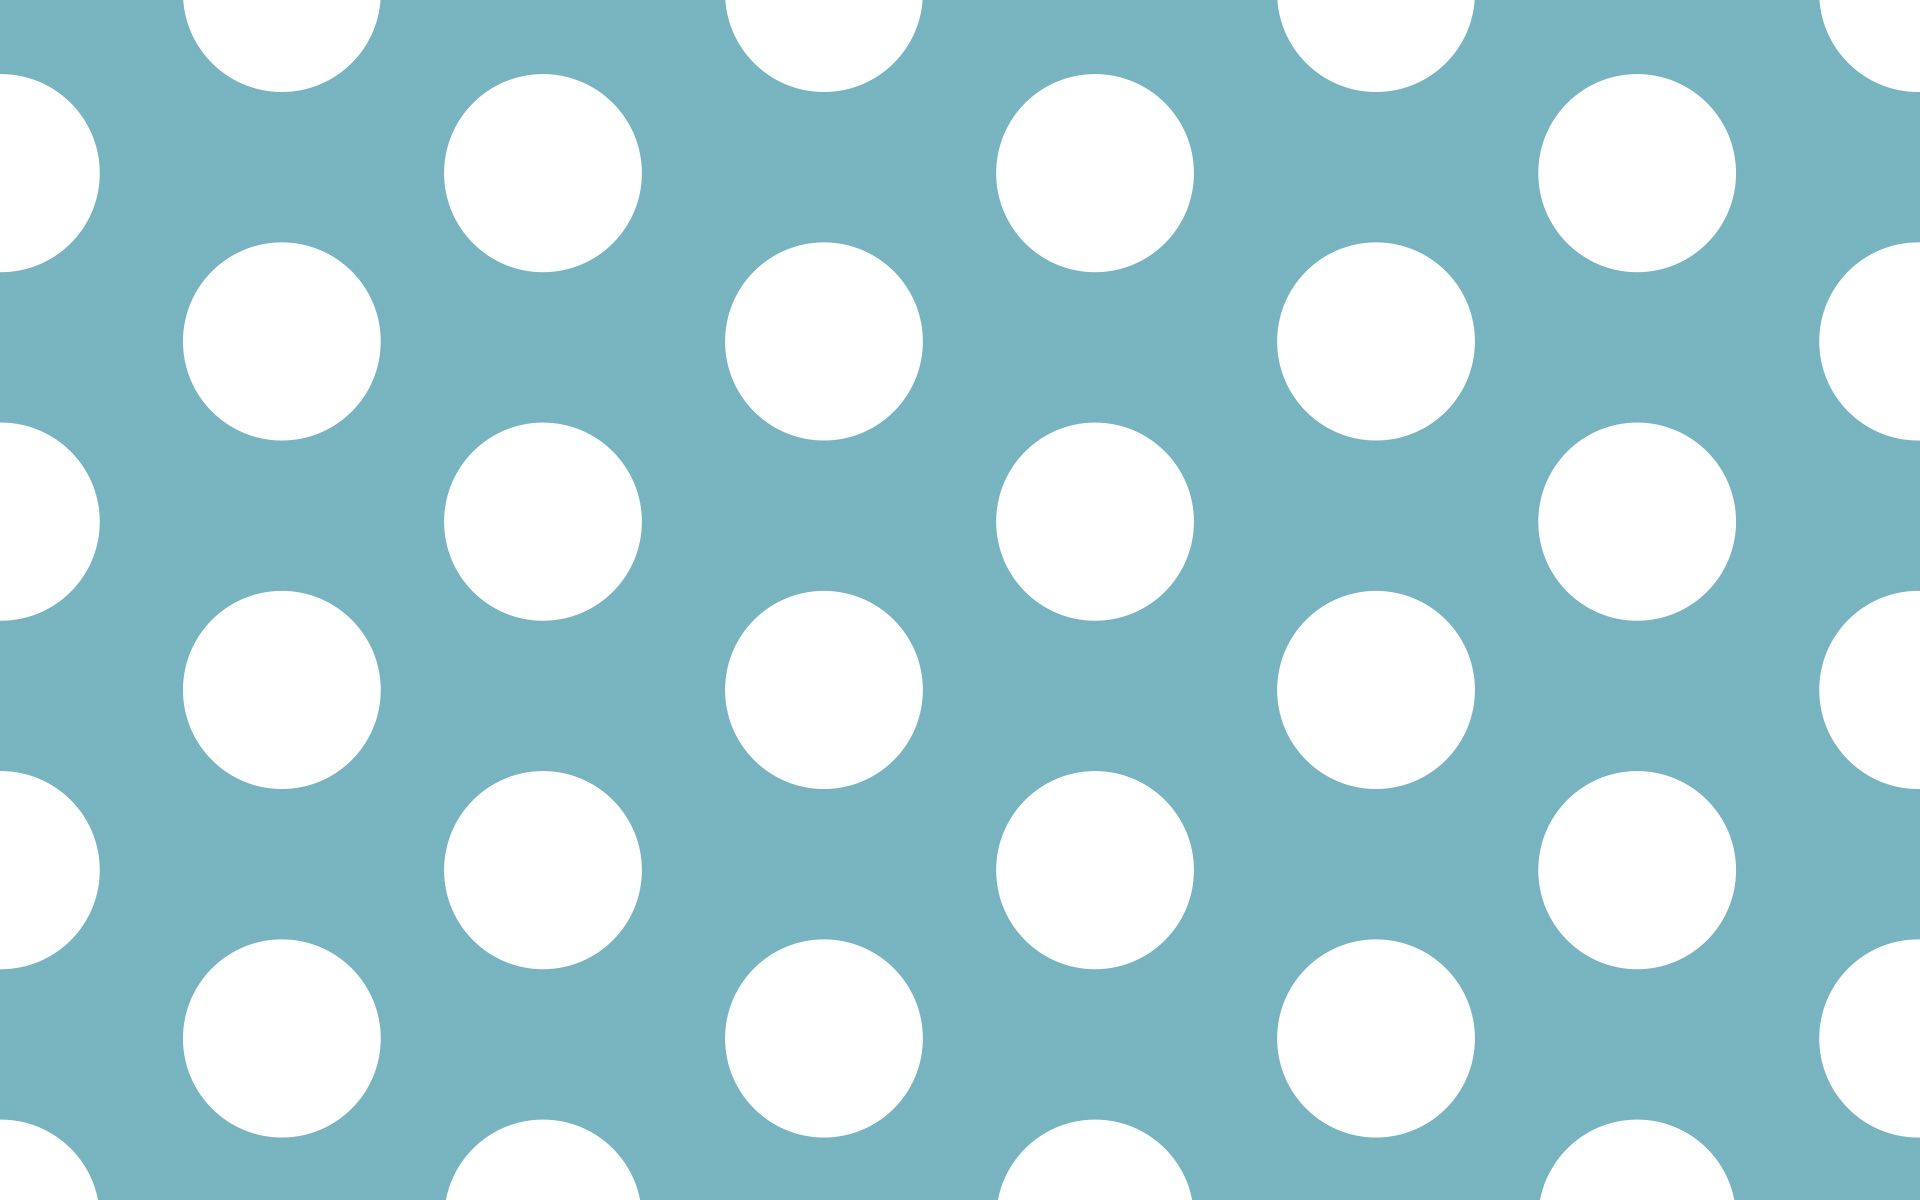 Blue Polka Dot Wallpapers 4k Hd Blue Polka Dot Backgrounds On Wallpaperbat